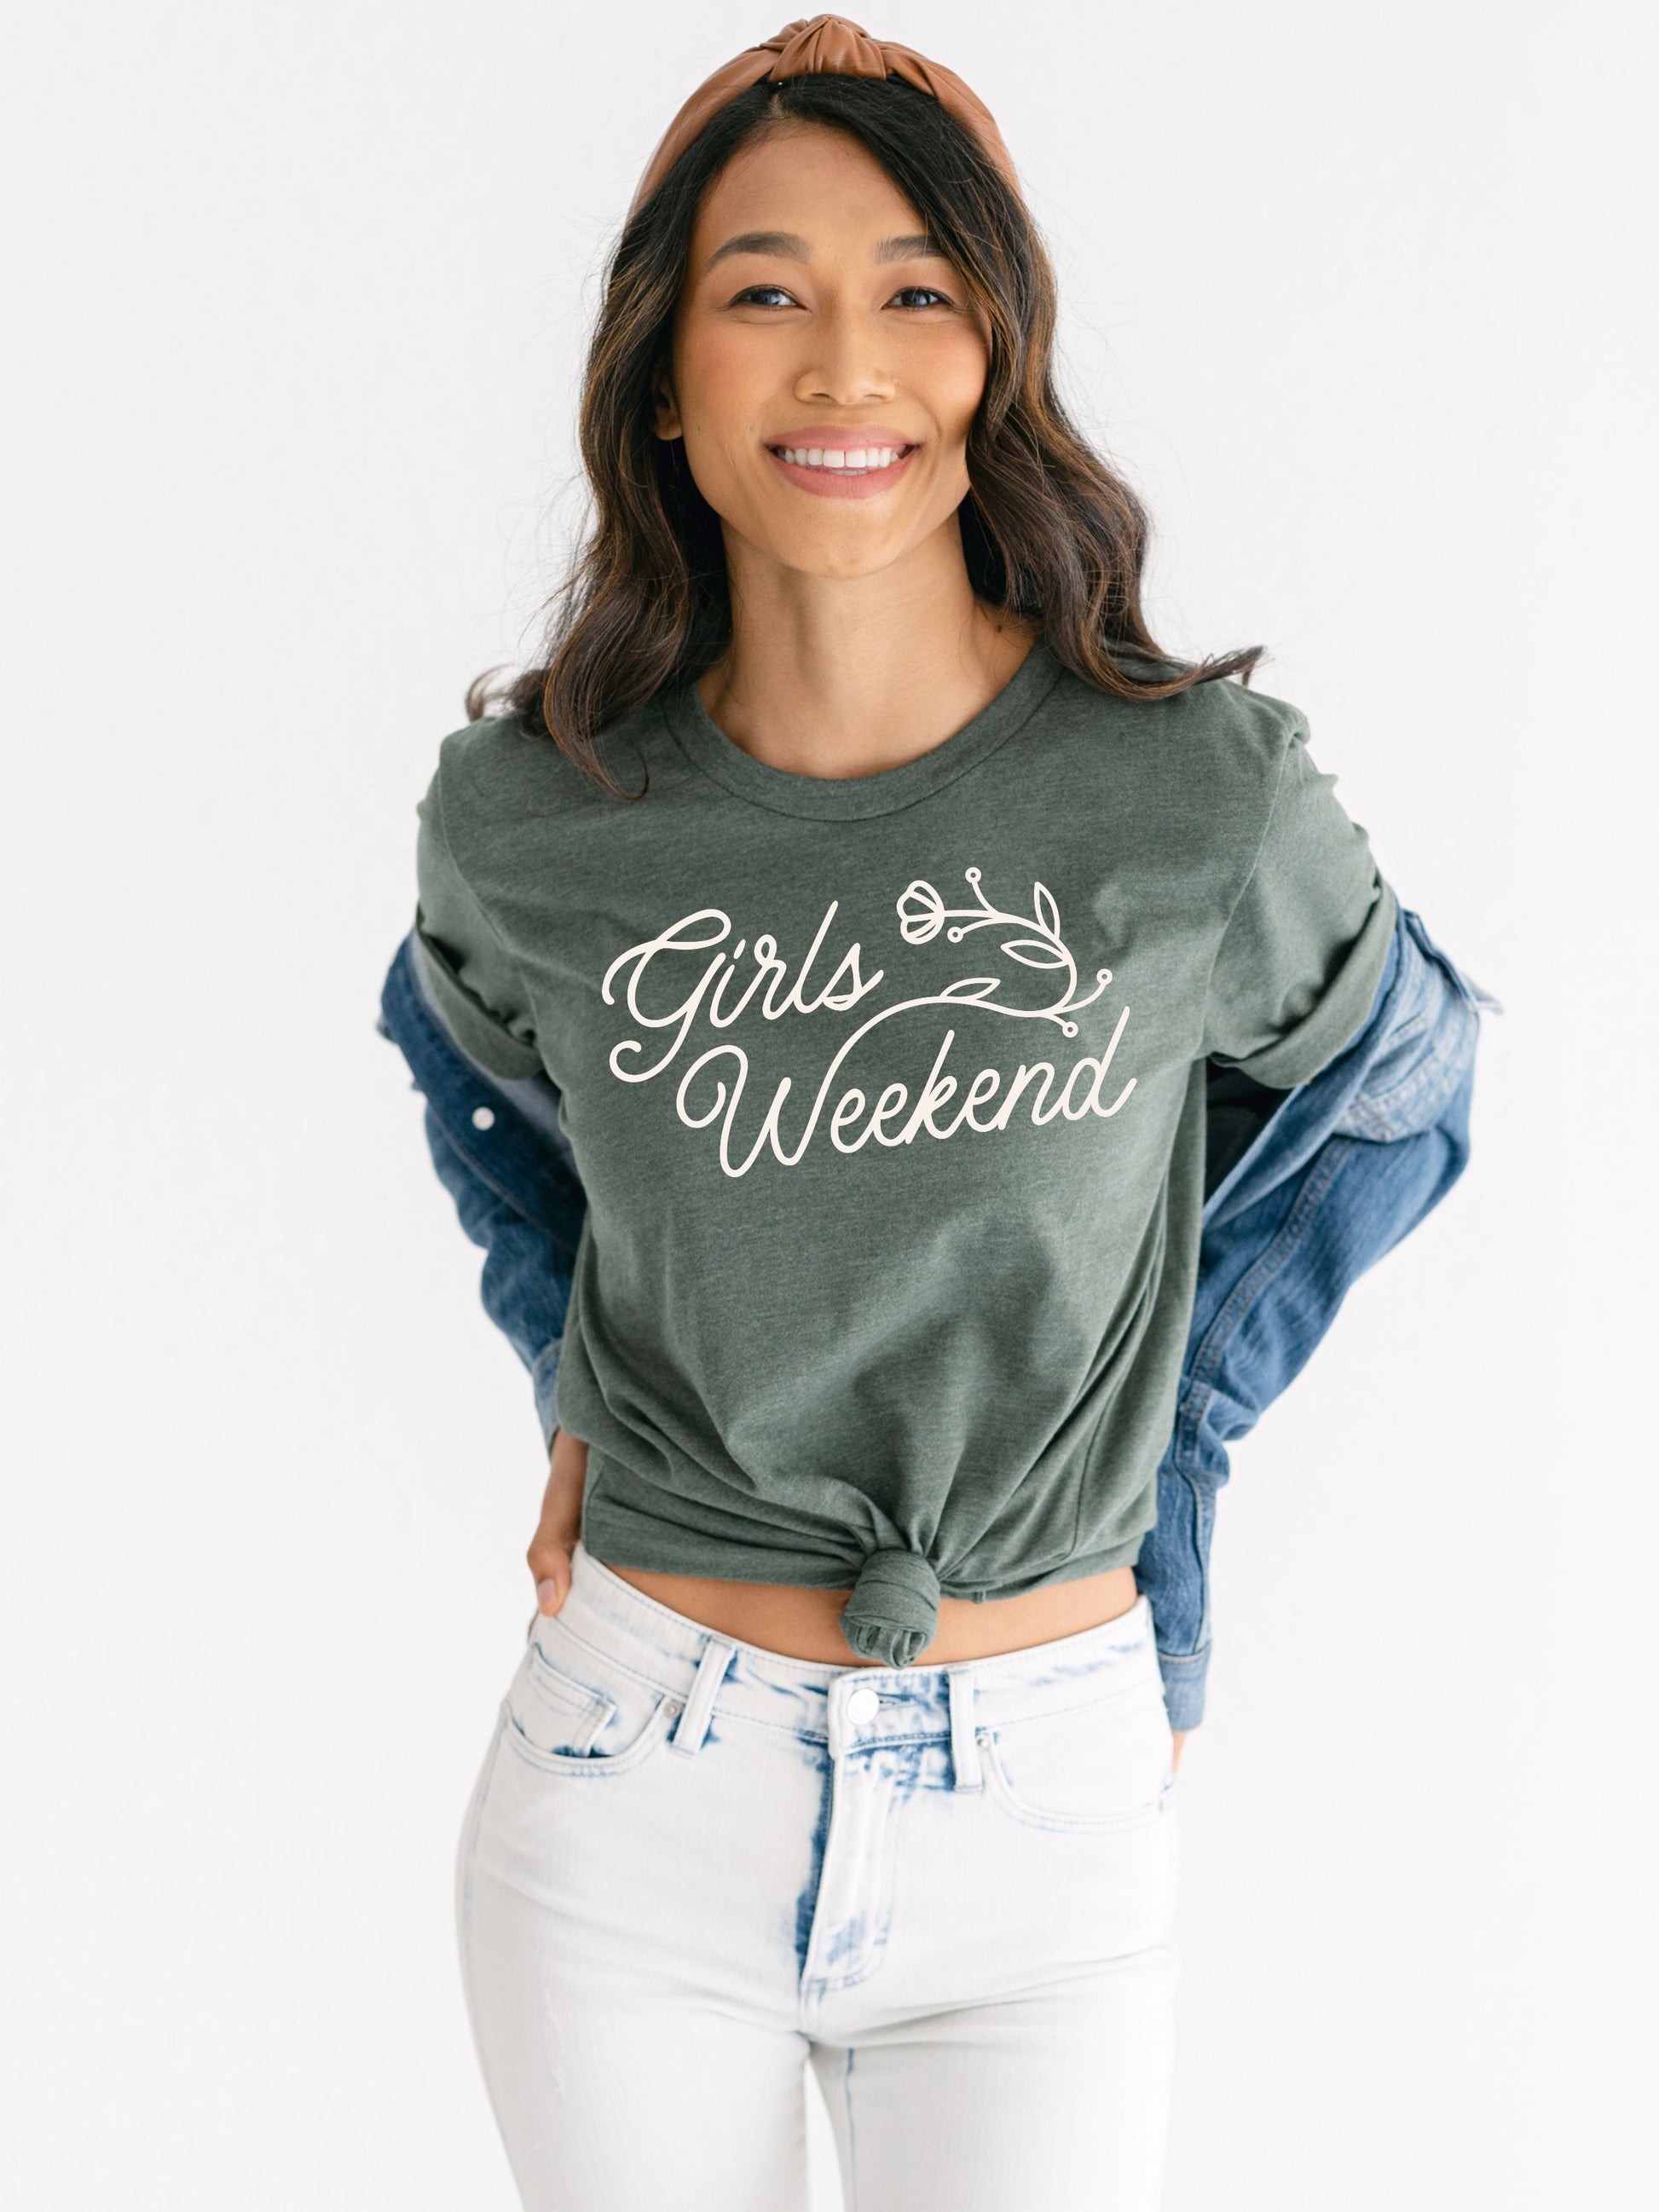 Girls Weekend Crewneck Sweatshirt, Shirt for Girls Weekend, Girls